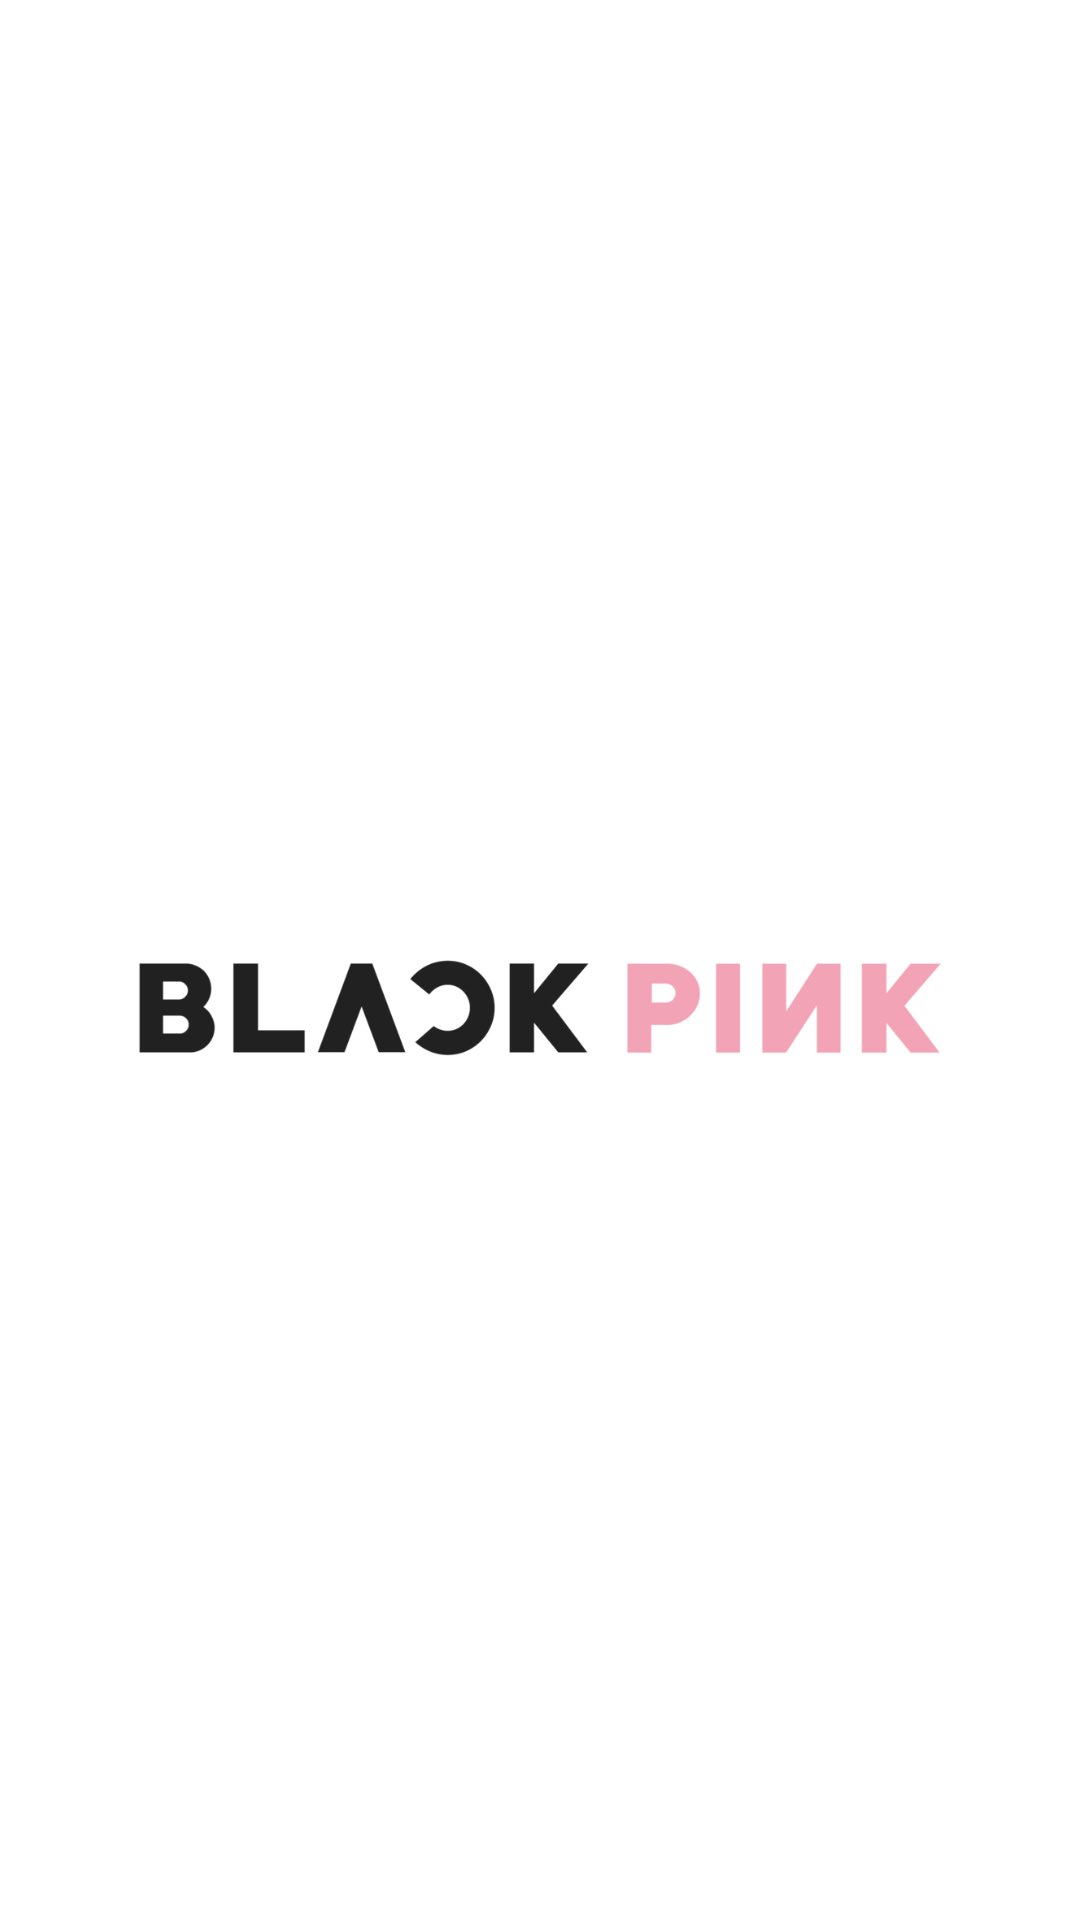 Blackpink ブラックピンクの高画質スマホ壁紙52枚 エモい スマホ壁紙辞典